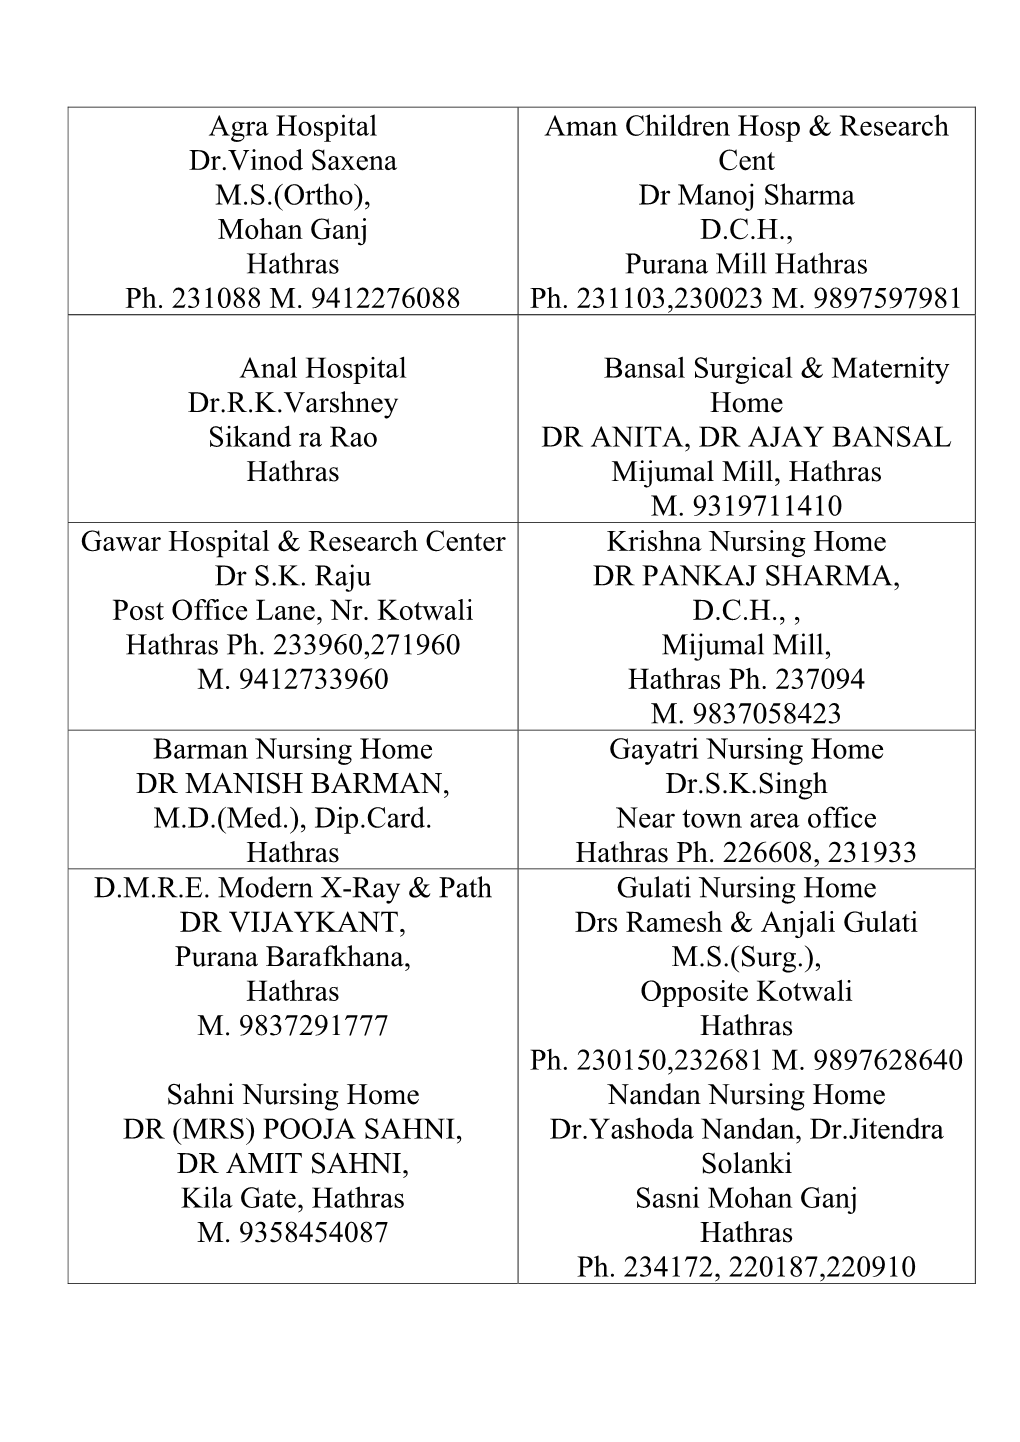 Agra Hospital Dr.Vinod Saxena M.S.(Ortho), Mohan Ganj Hathras Ph. 231088 M. 9412276088 Aman Children Hosp & Research Cent Dr